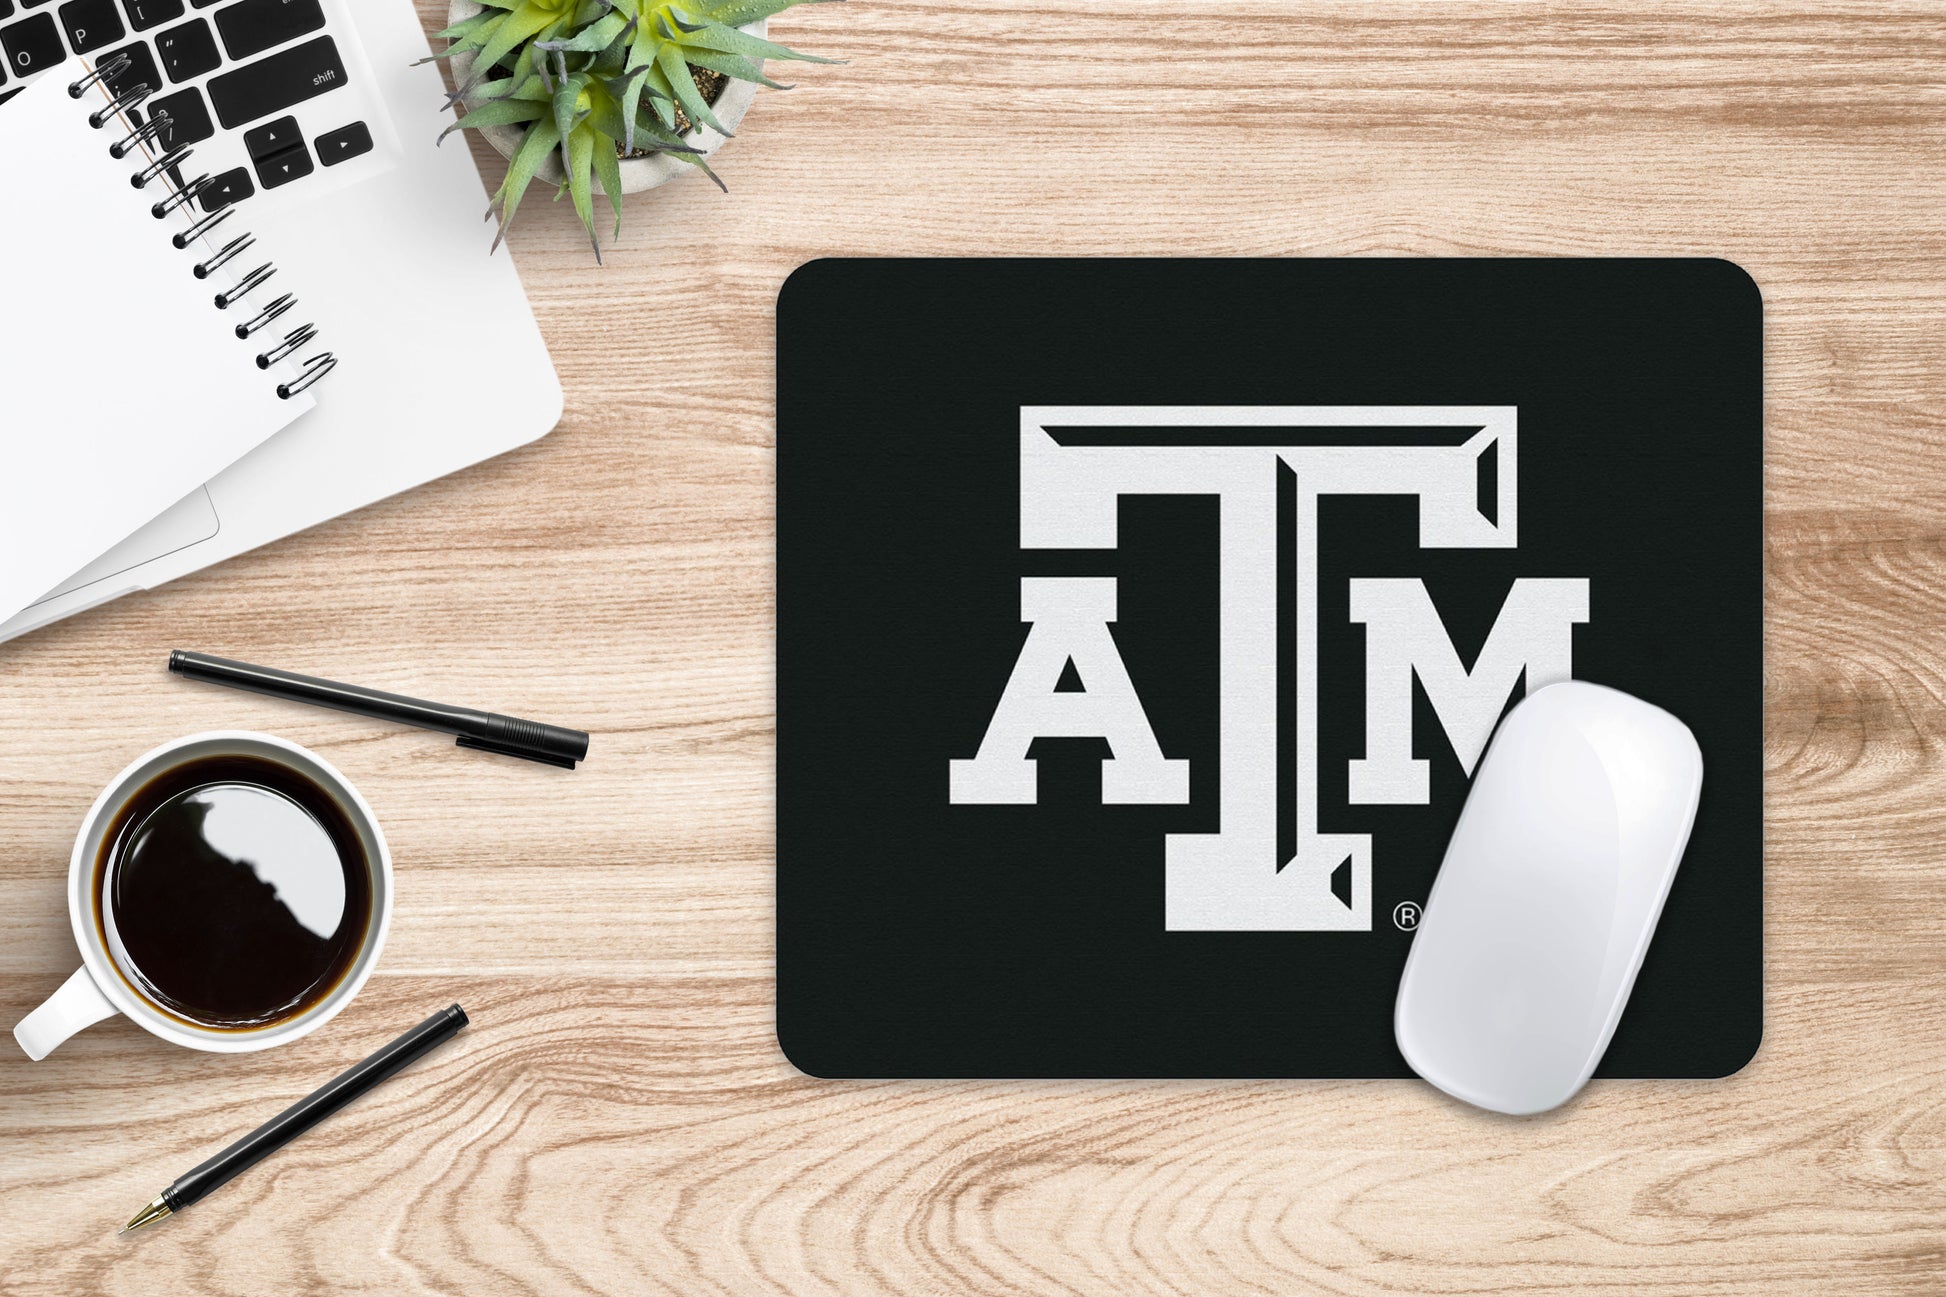 Texas A&M University Mouse Pad (MPADC-TAM)